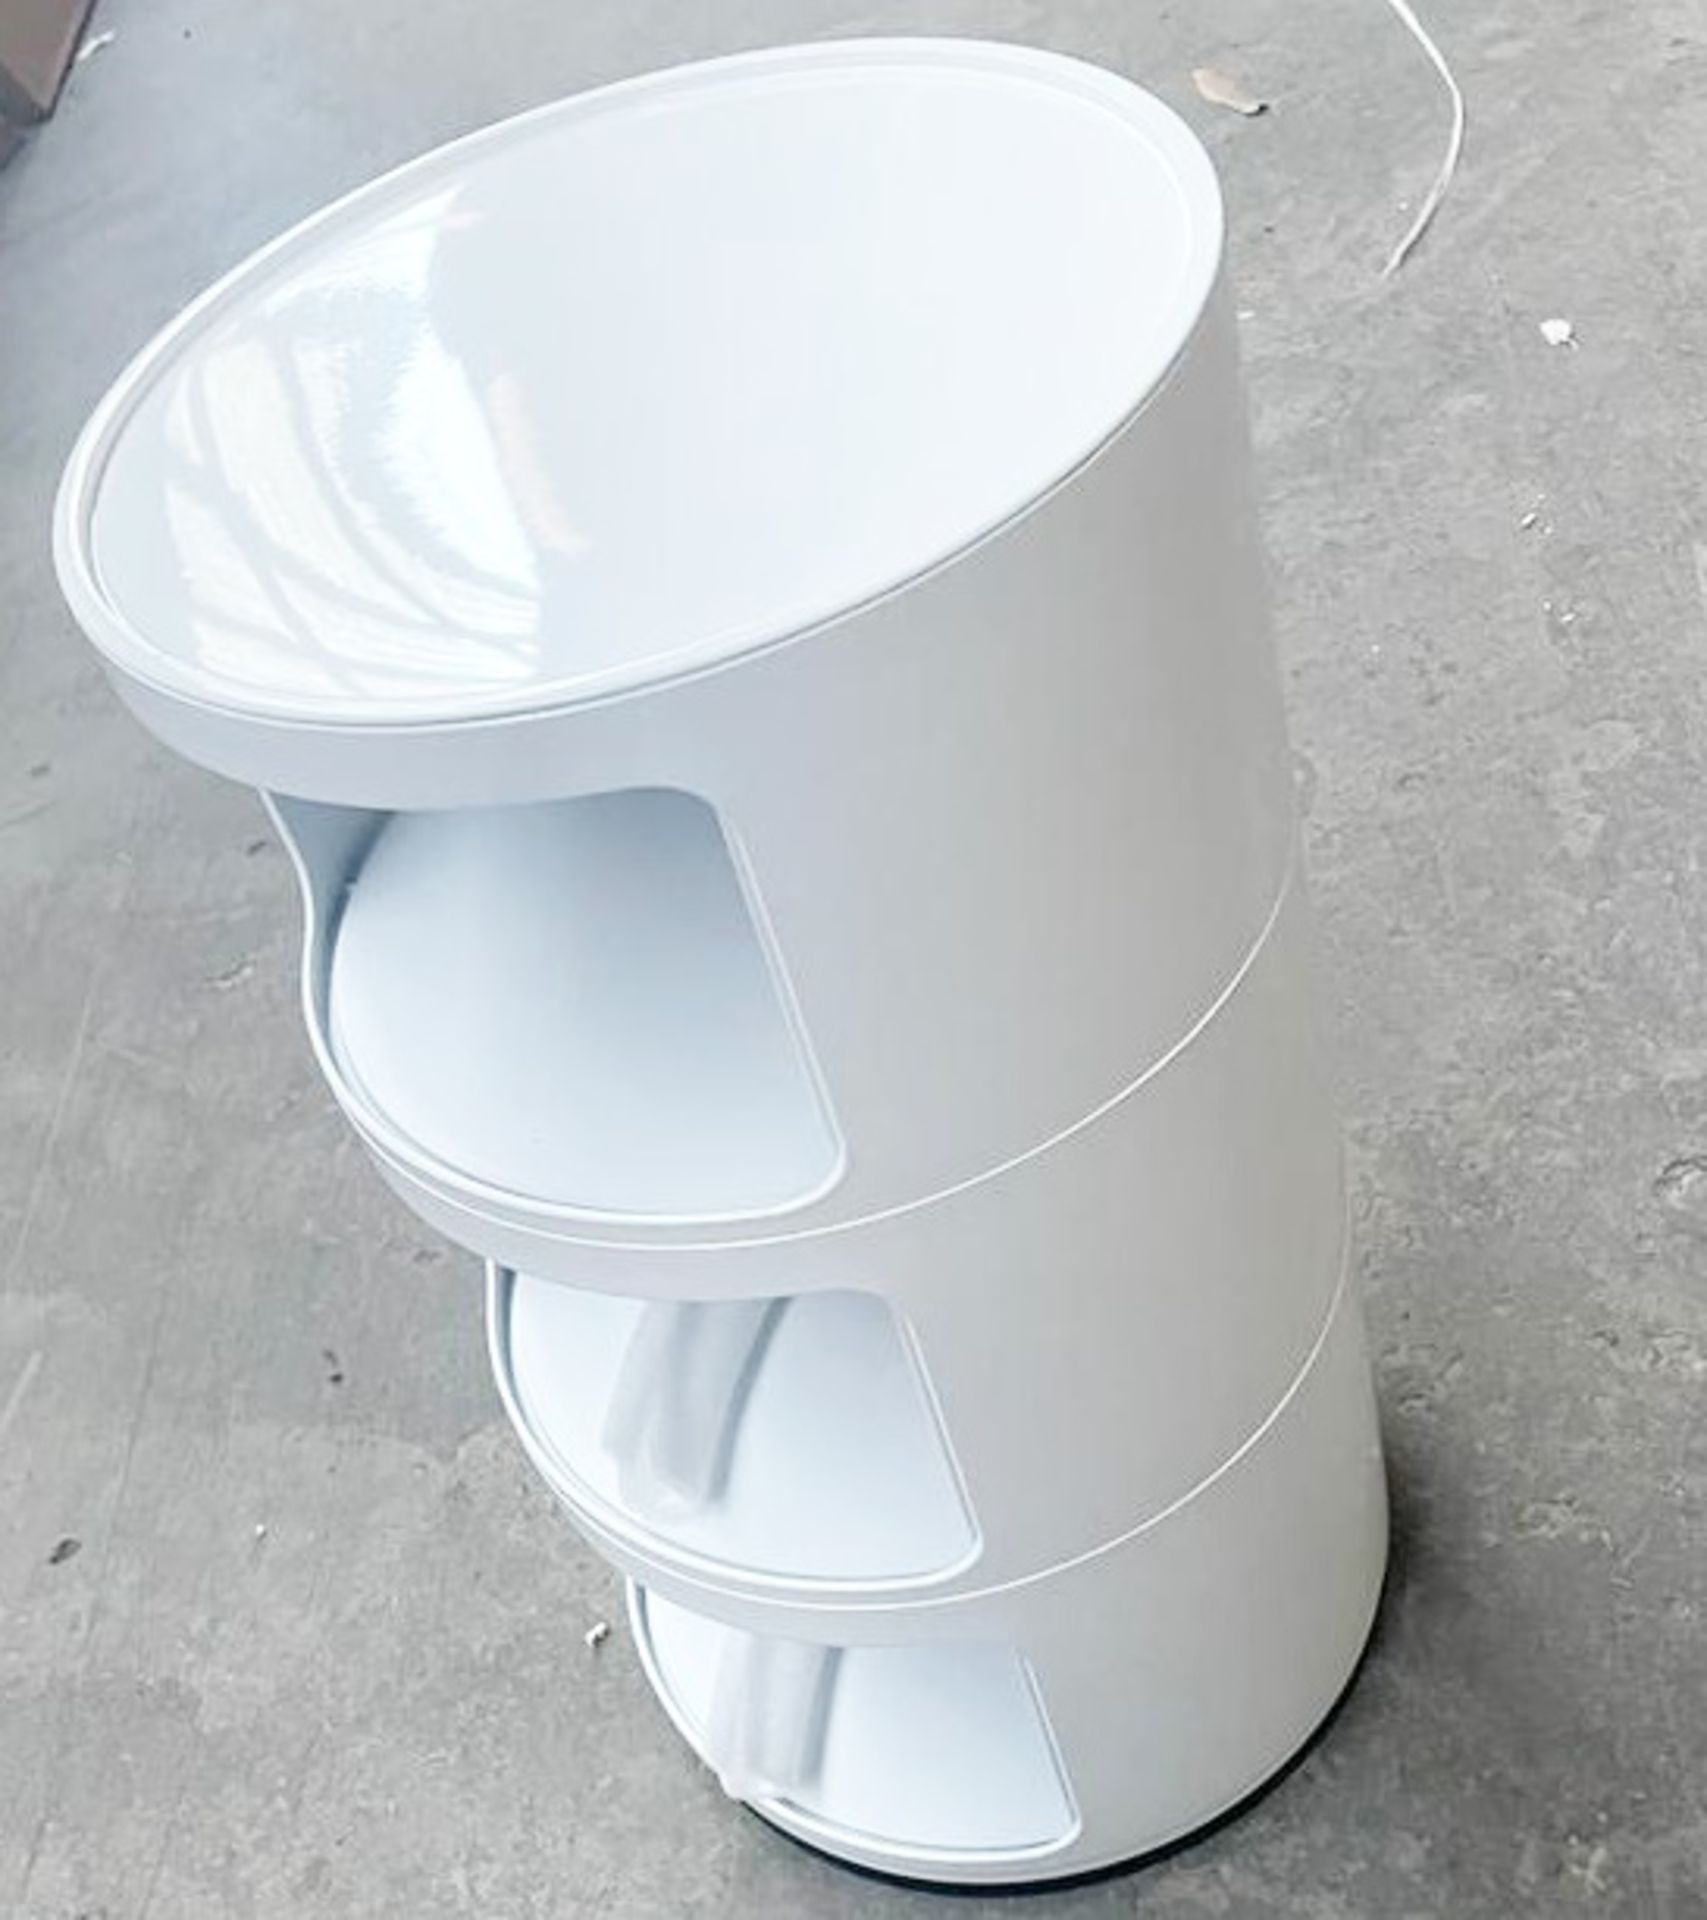 1 x 3 Tier Componibili Storage Unit White - Dimensions: 32(w) x 32(d) x 60(h) cm - Brand New Boxed S - Image 3 of 6